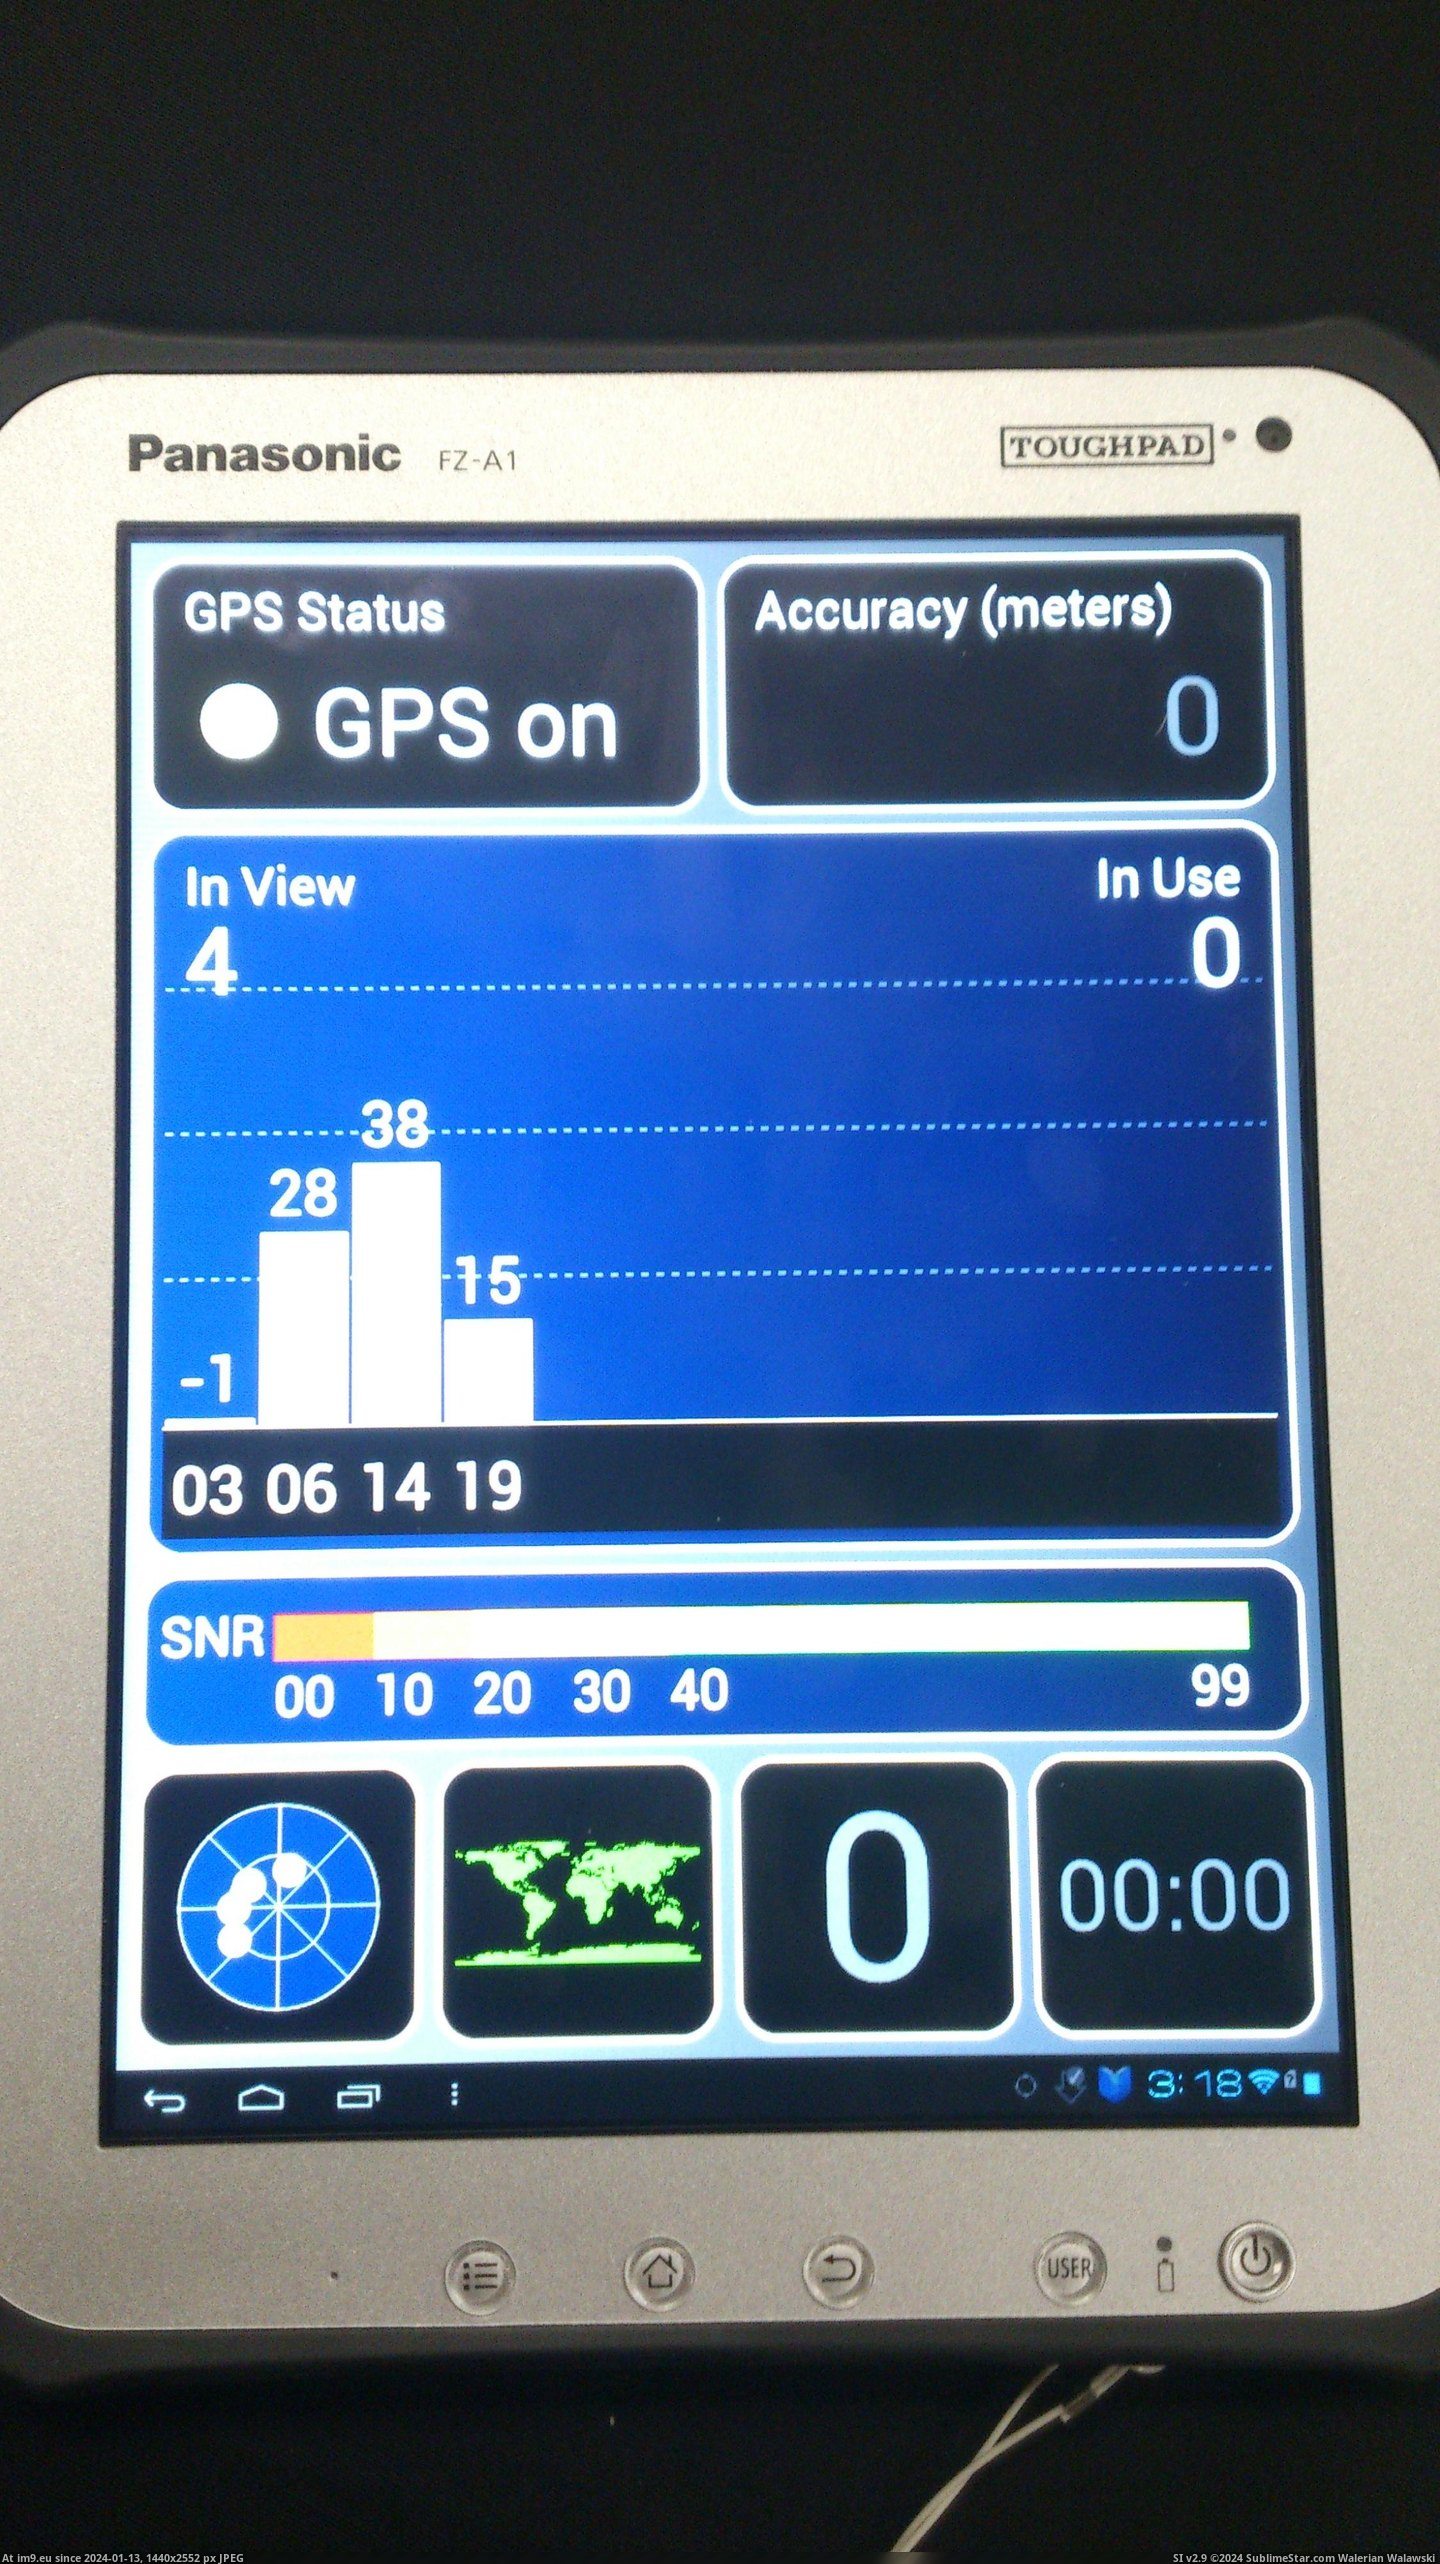 #Test #Indoors #Gps #App Indoors A1 - GPS Test App Pic. (Изображение из альбом Ocean View))